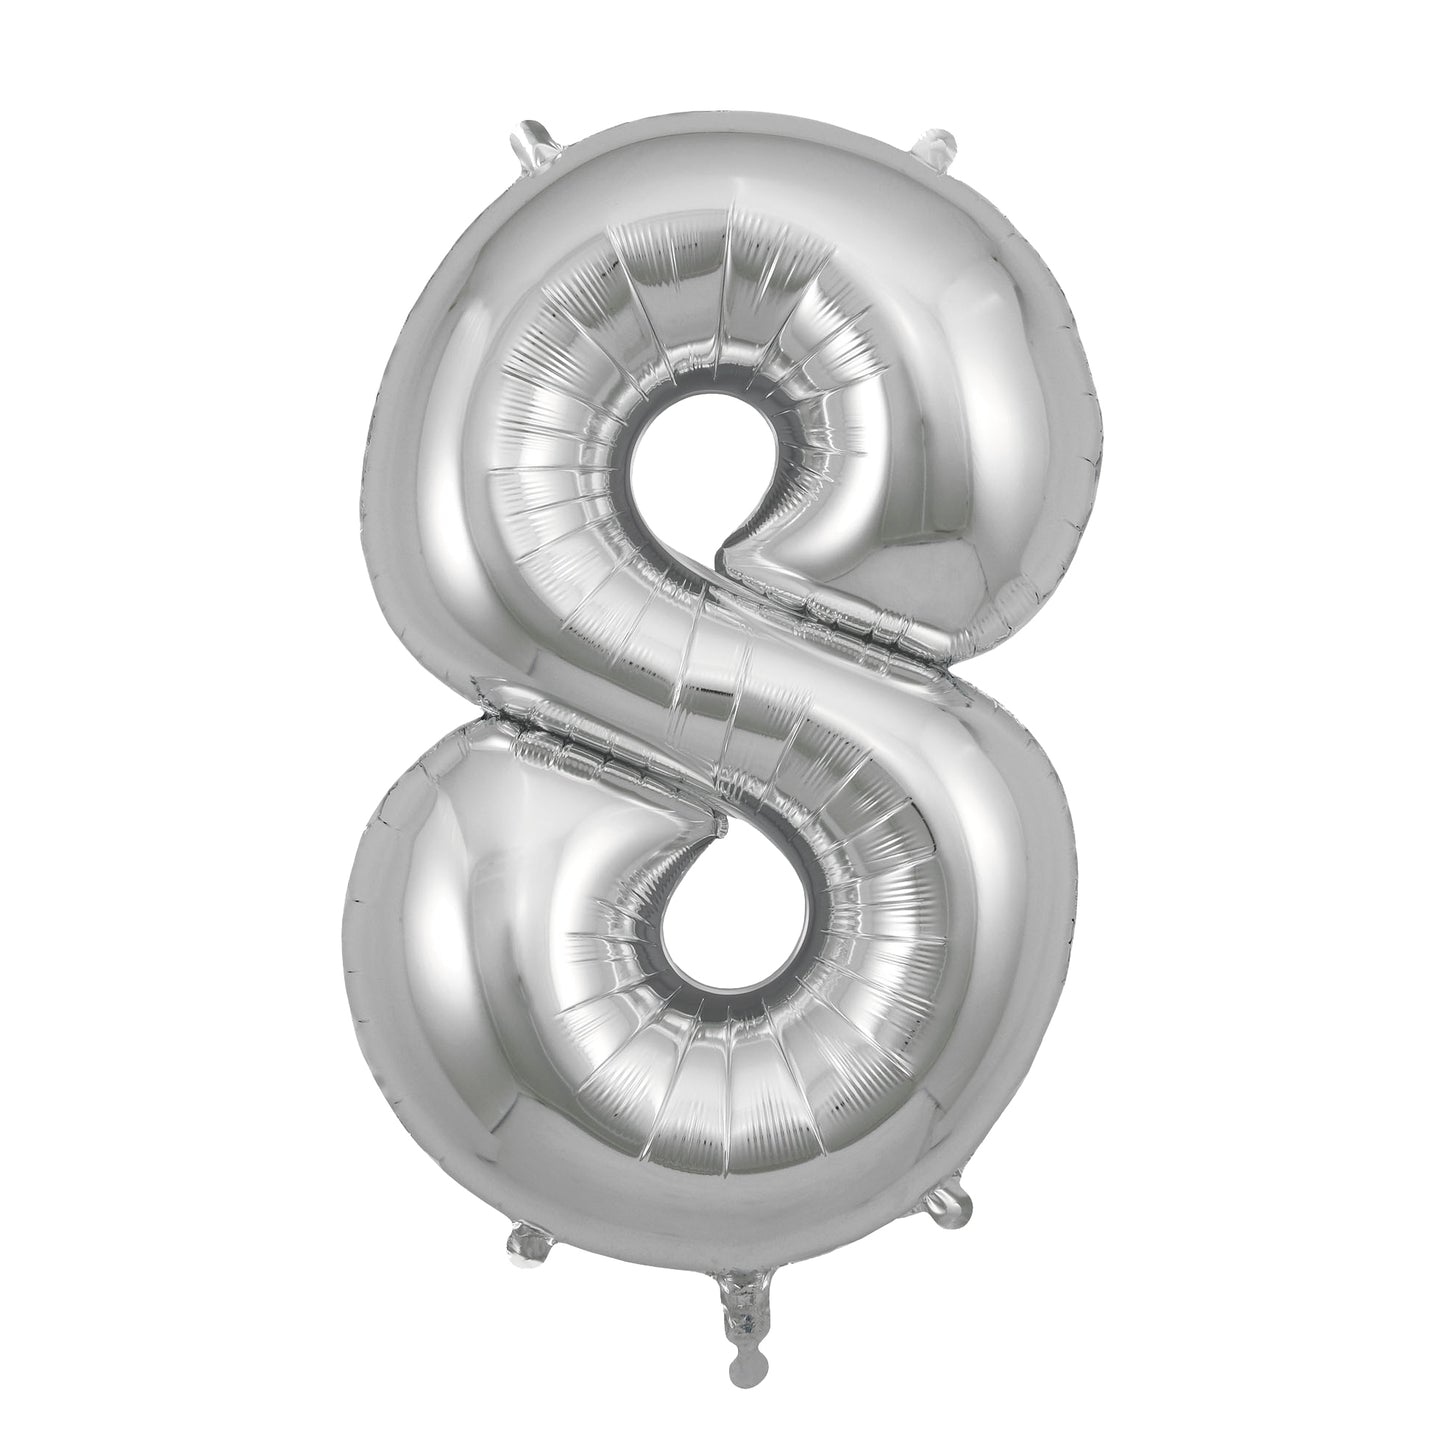 NUMERO ARGENTATO "8" – Foil Balloon